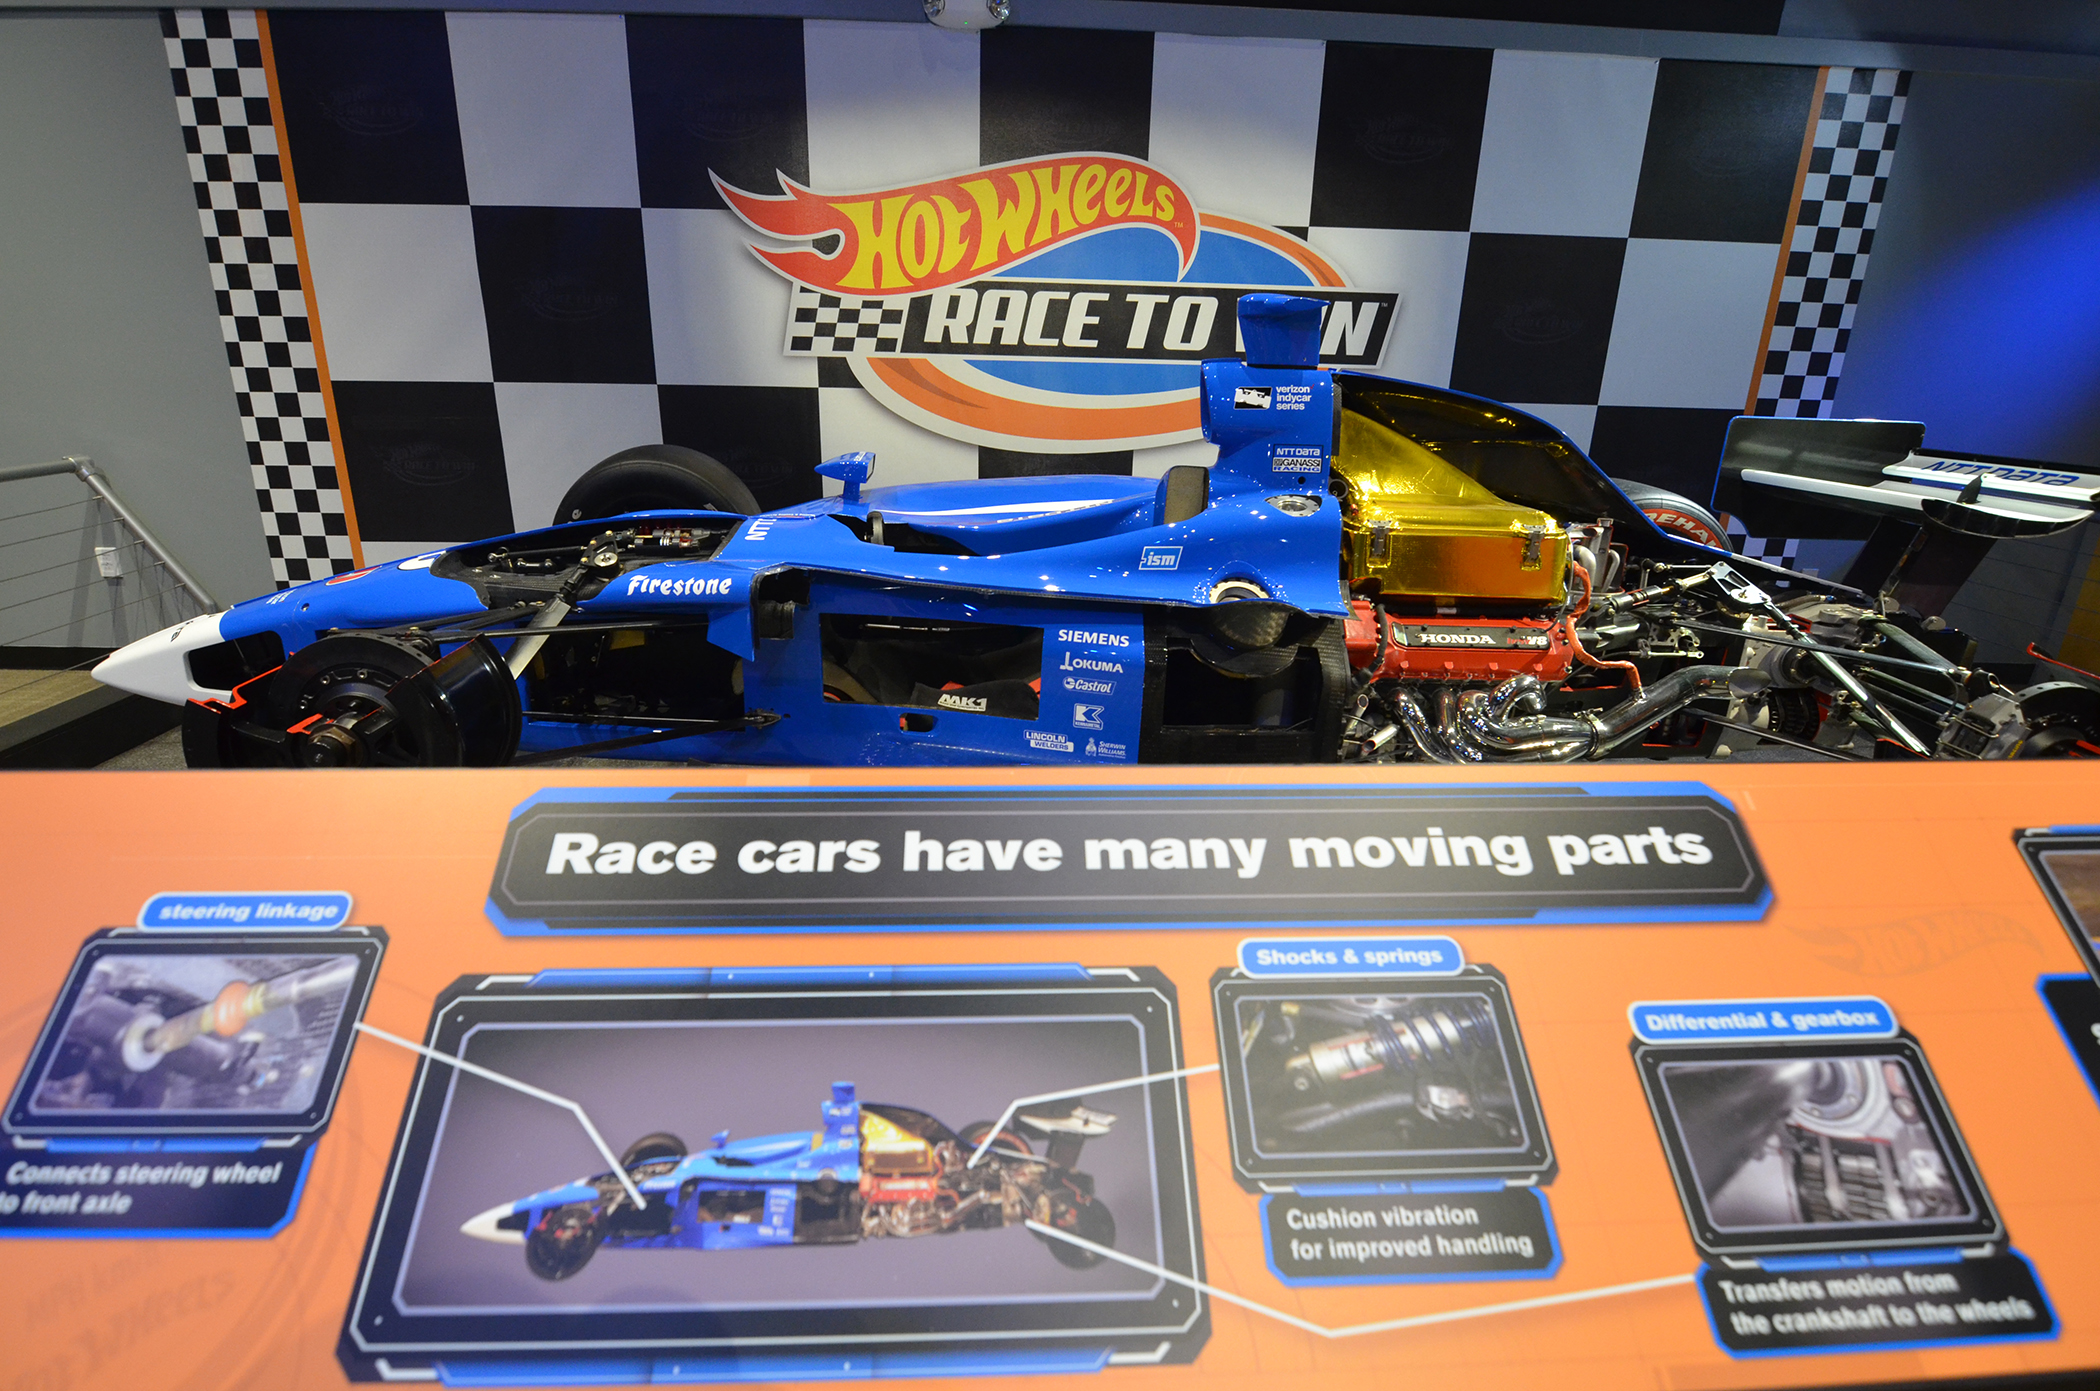 IndyyCar cutaway at Hot Wheels™: Race to Win™